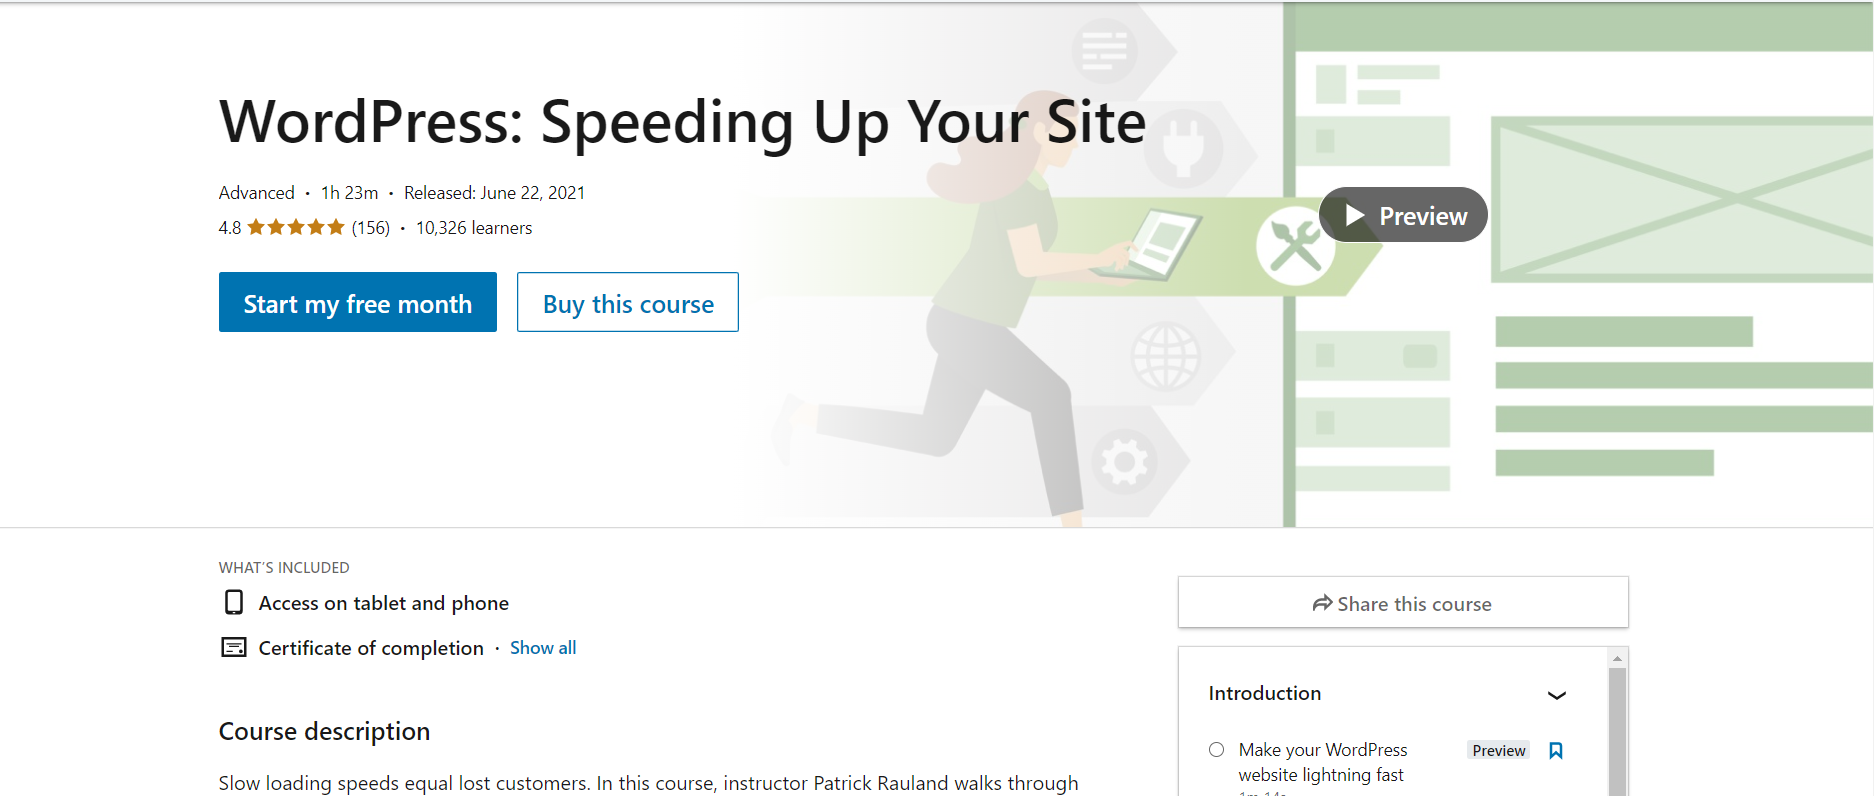 WordPress Speeding Up Your Site